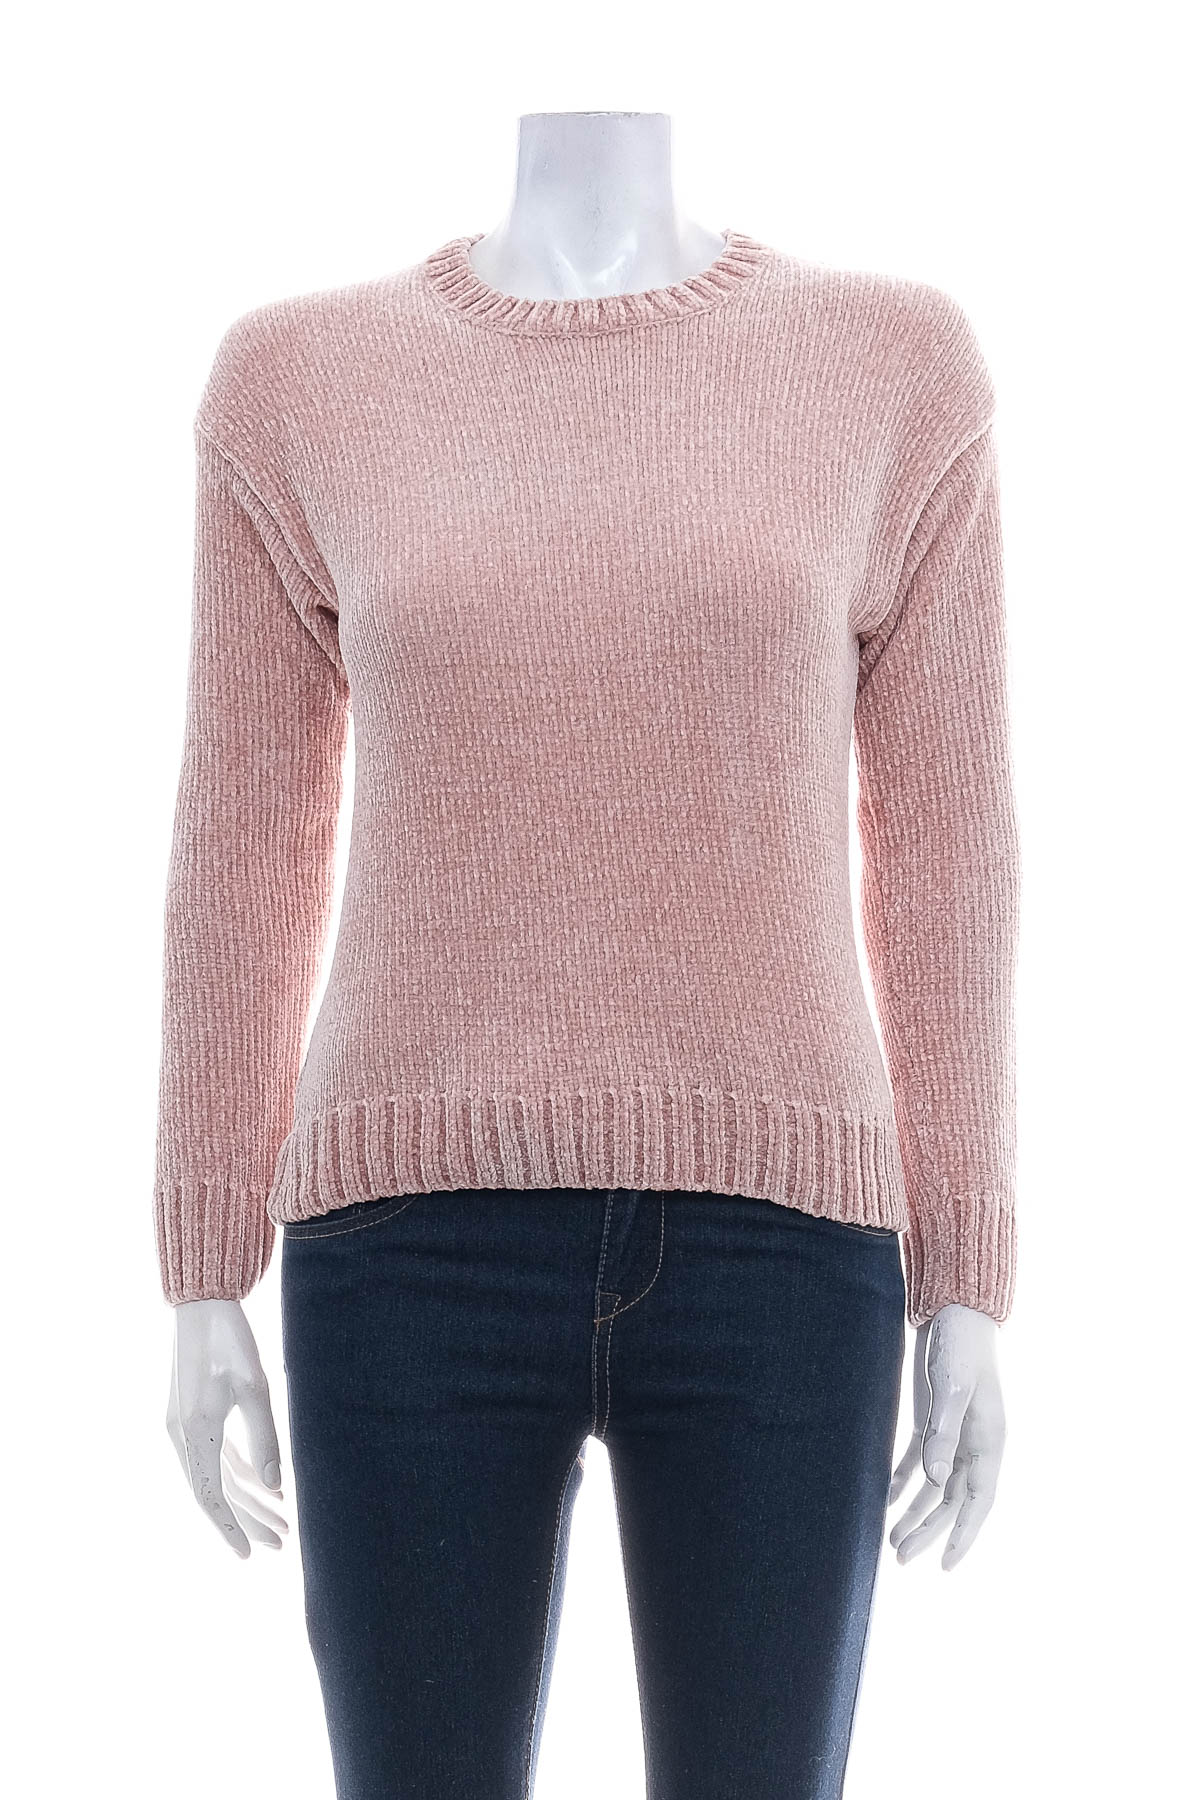 Women's sweater - CROPP - 0